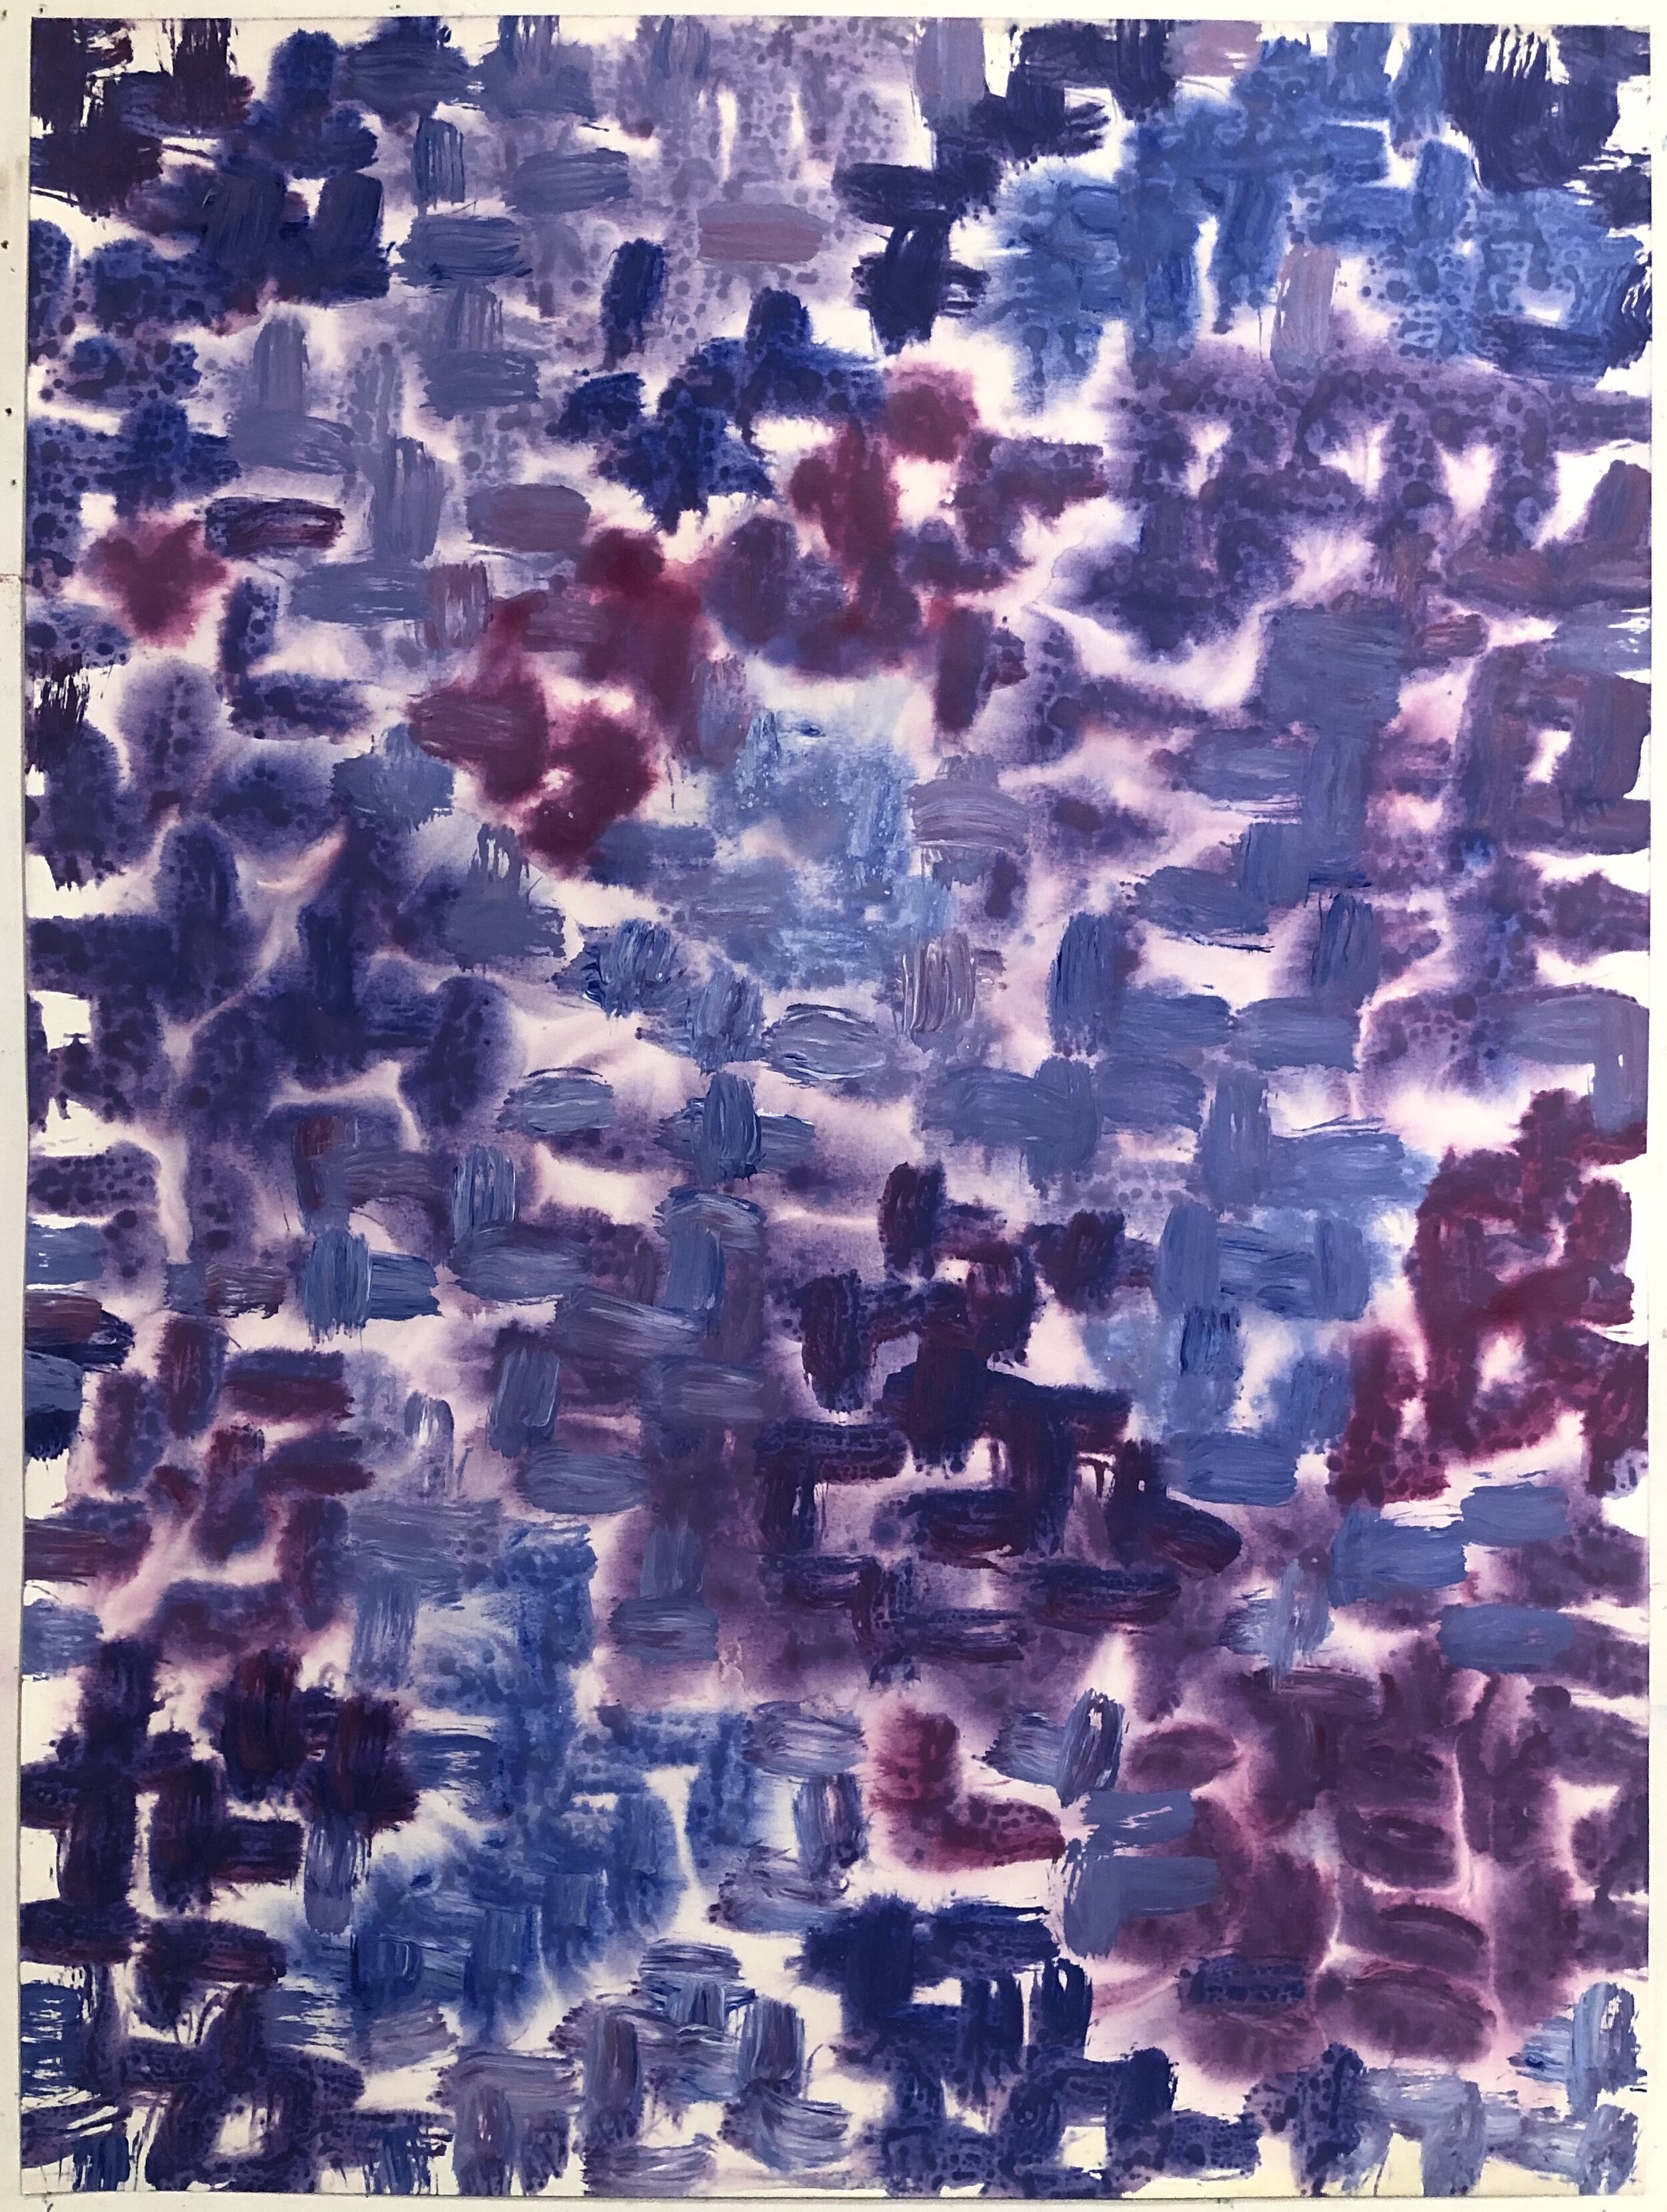 markperryart-acrylic-painting-on-paper-smallworks-24x18-violet-markmaking-fuchsia.jpg